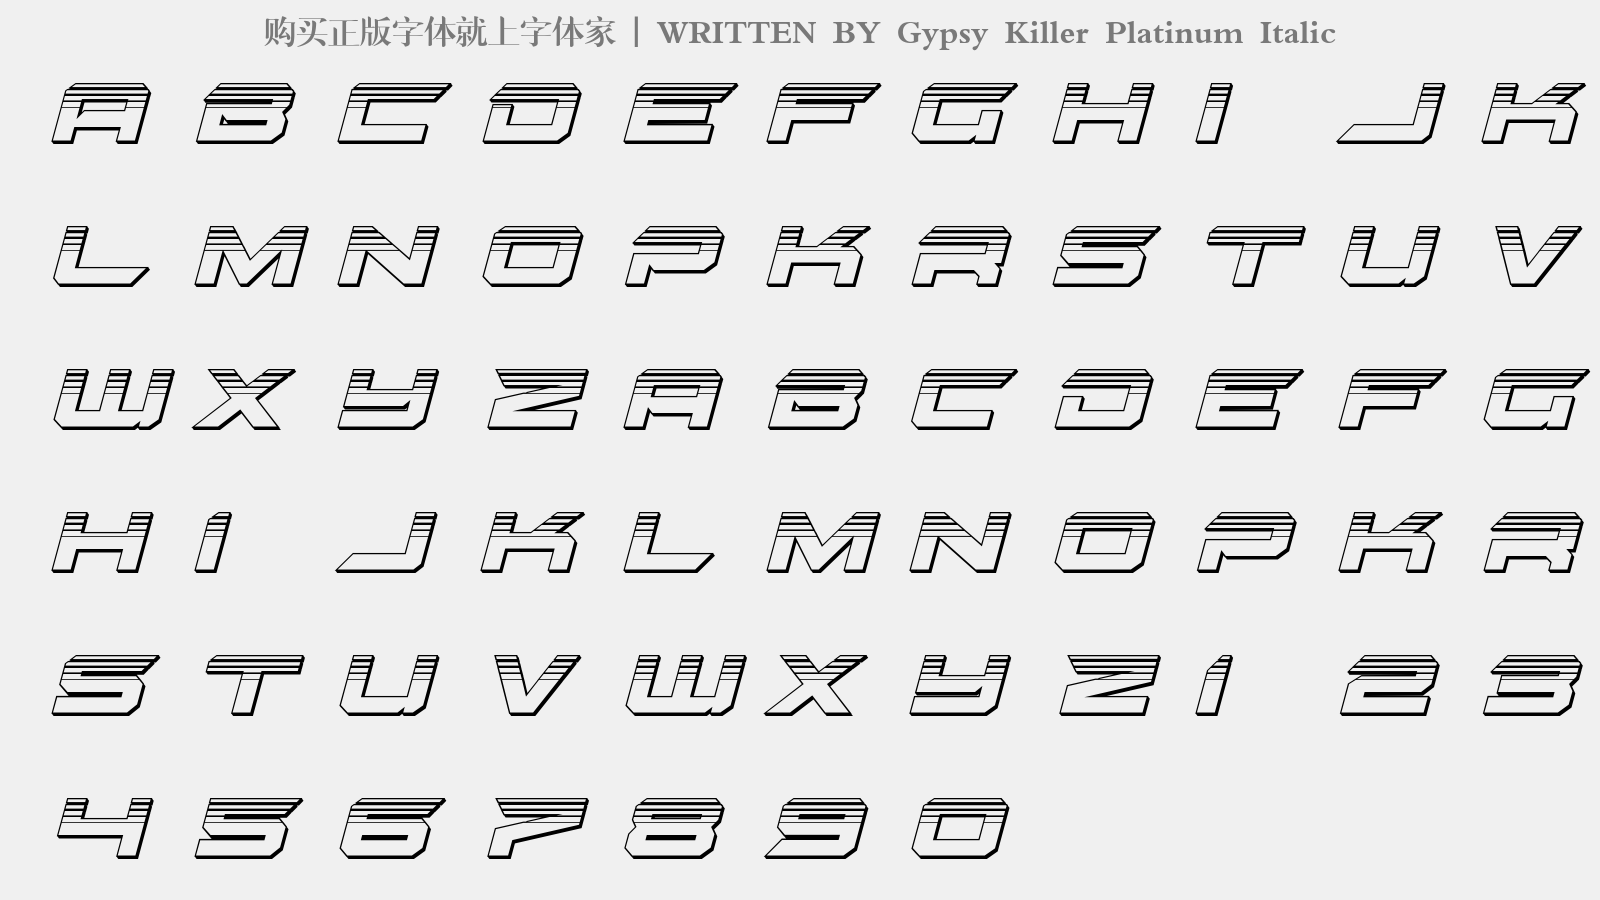 Gypsy Killer Platinum Italic - 大写字母/小写字母/数字